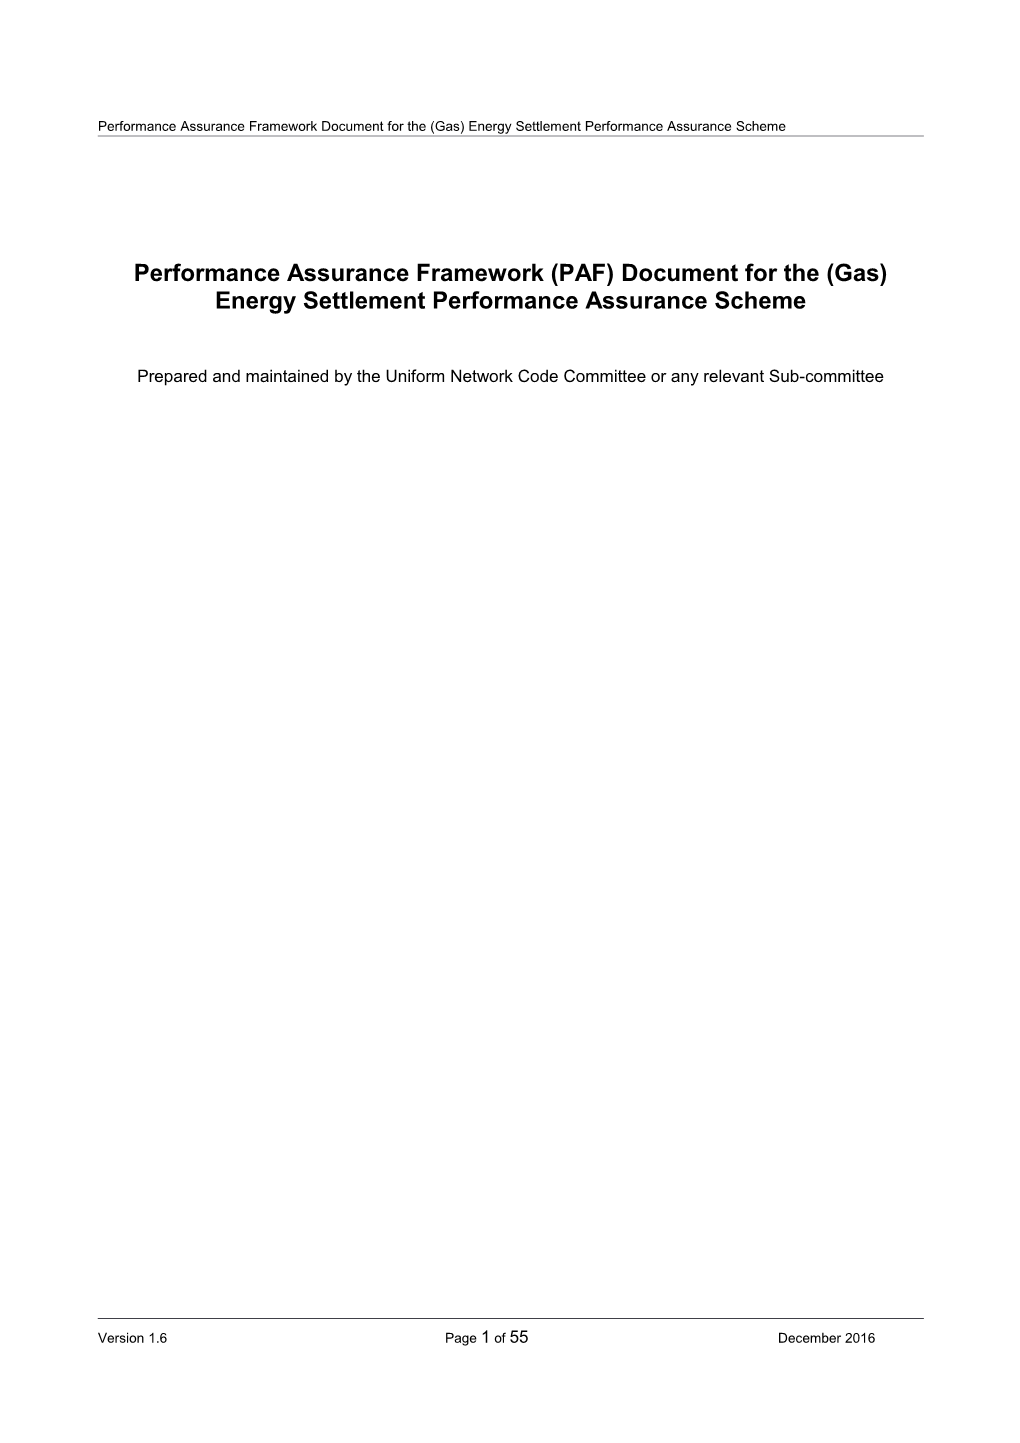 Performance Assurance Framework (PAF) Document for the (Gas) Energy Settlement Performance